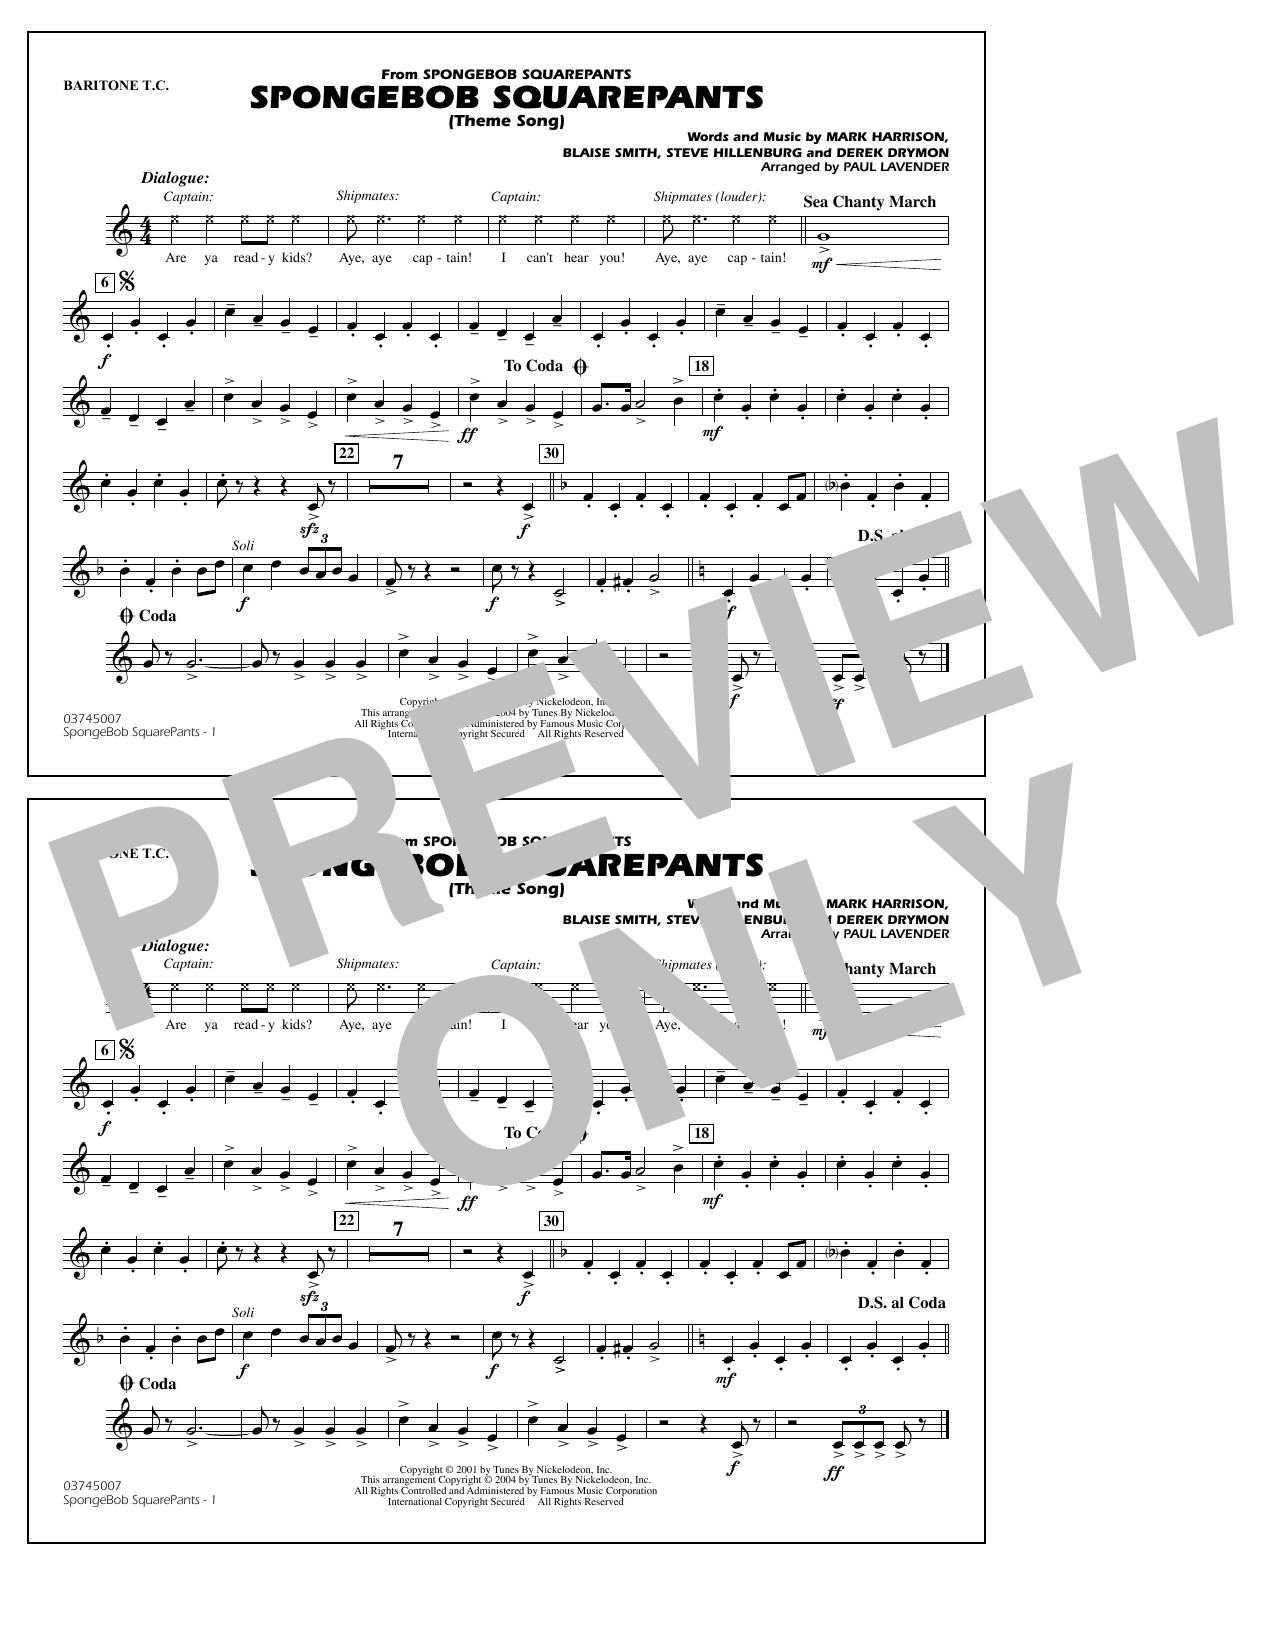 Steve Hillenburg Spongebob Squarepants (Theme Song) (arr. Paul Lavender) - Baritone T.C. sheet music notes and chords arranged for Marching Band